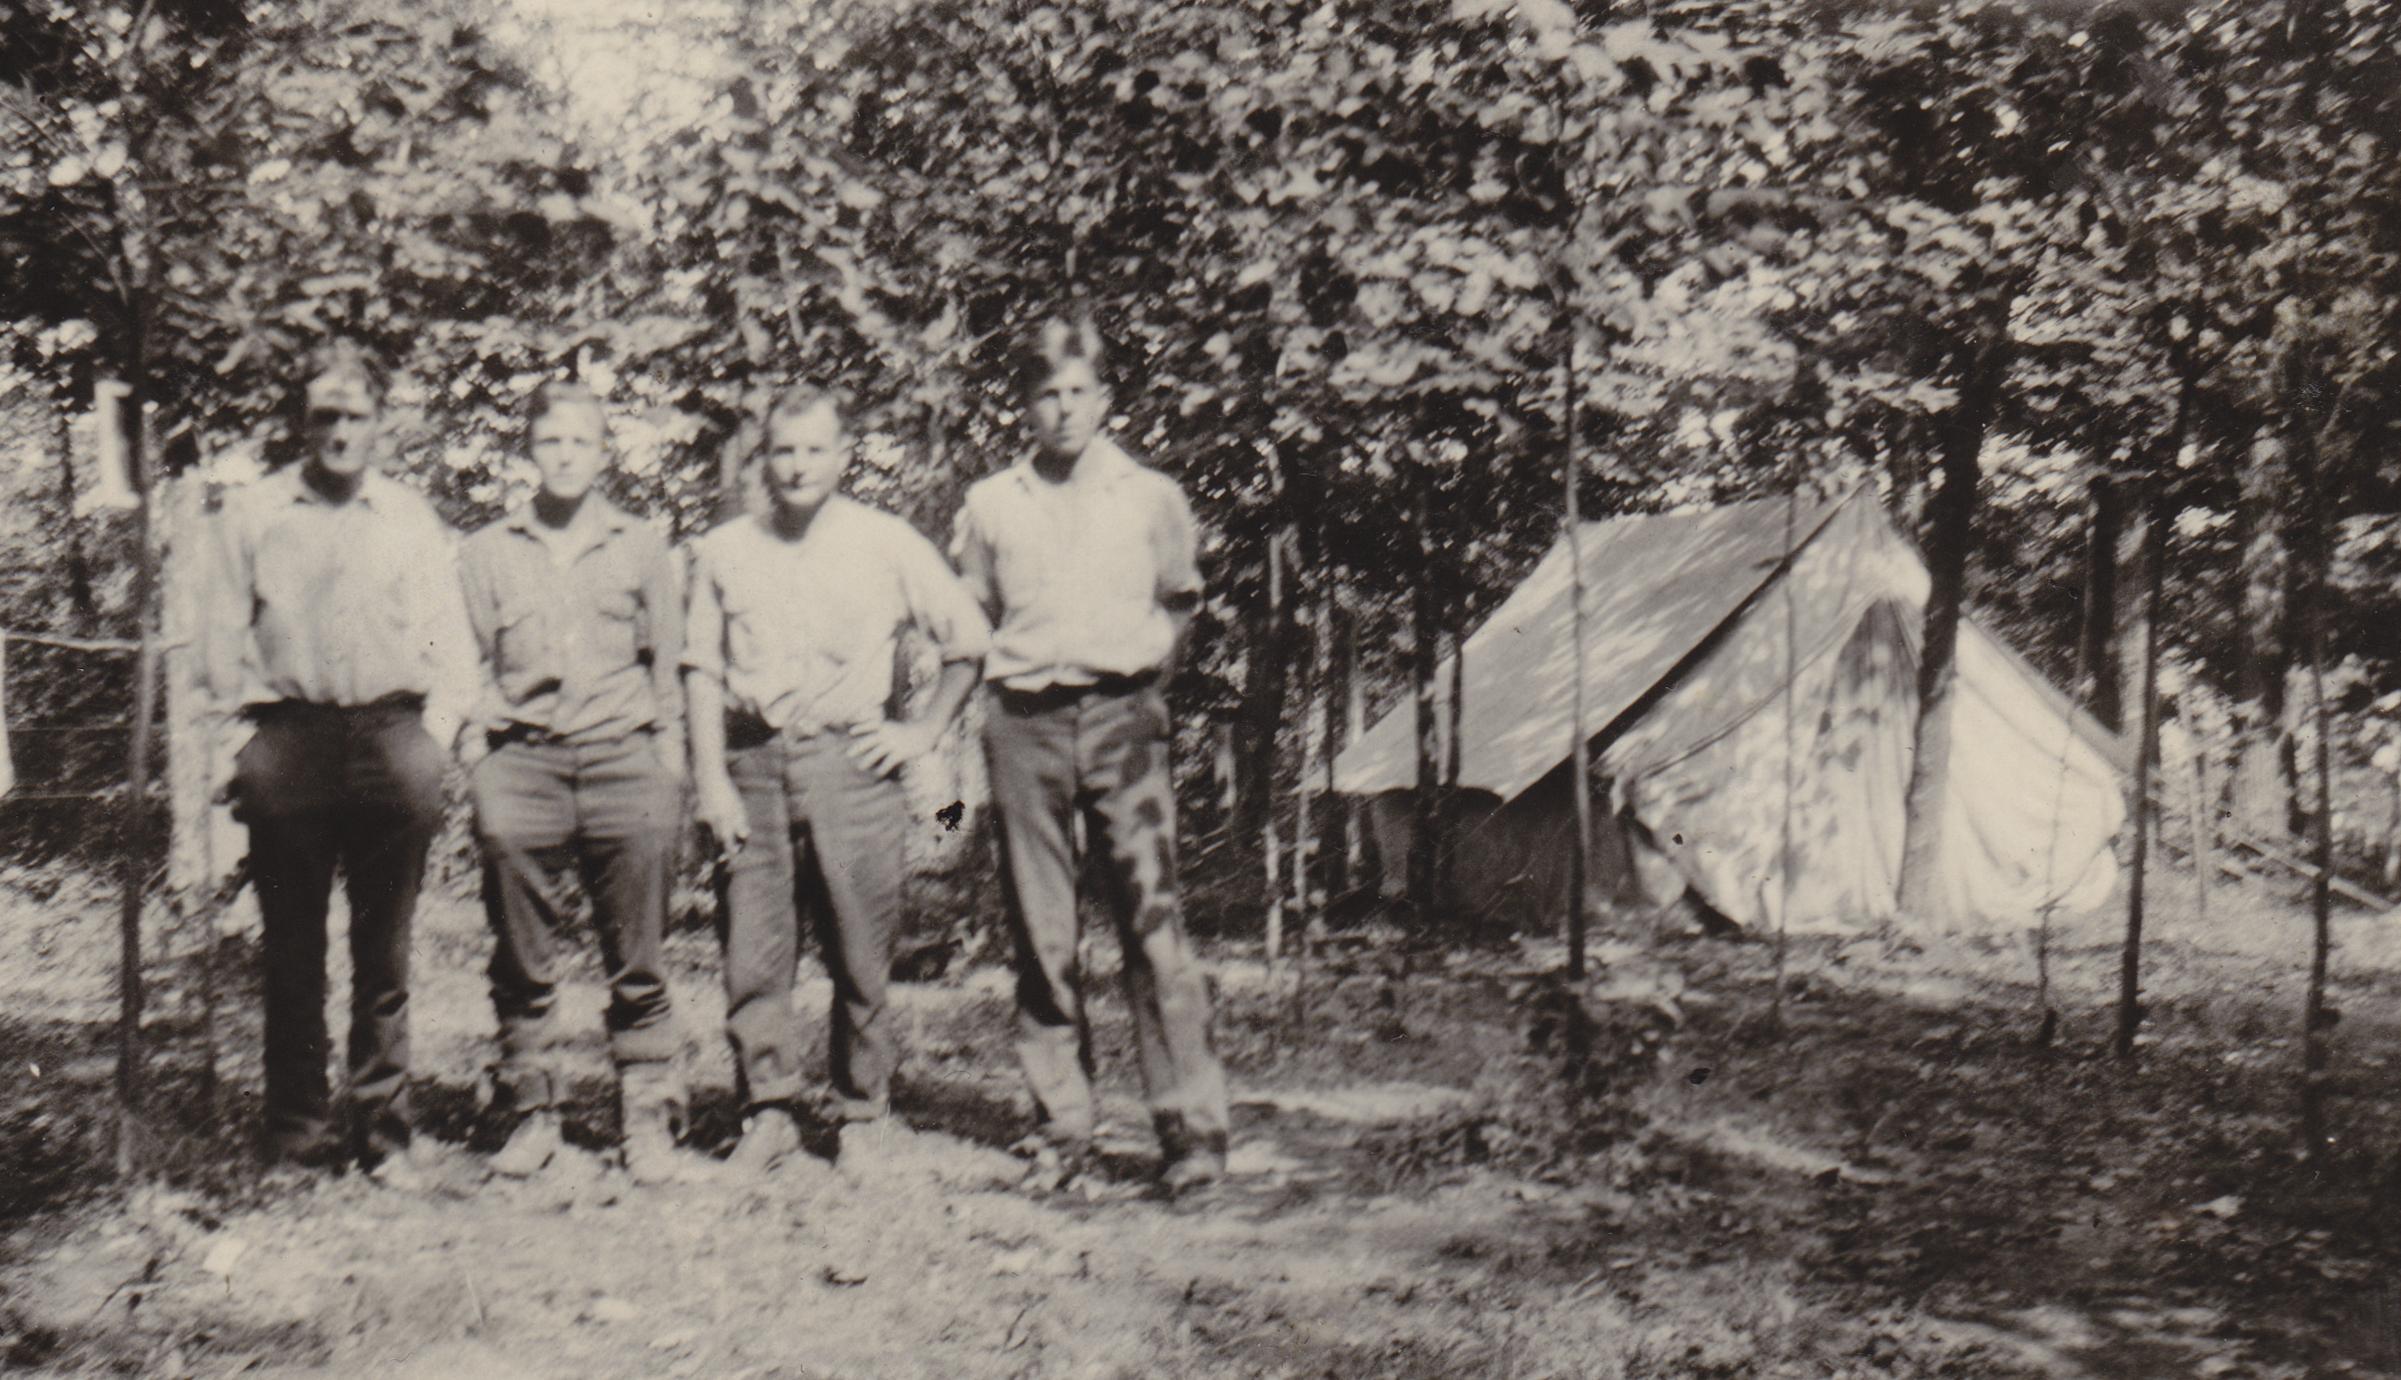 Geologists at Lyman Lake camp